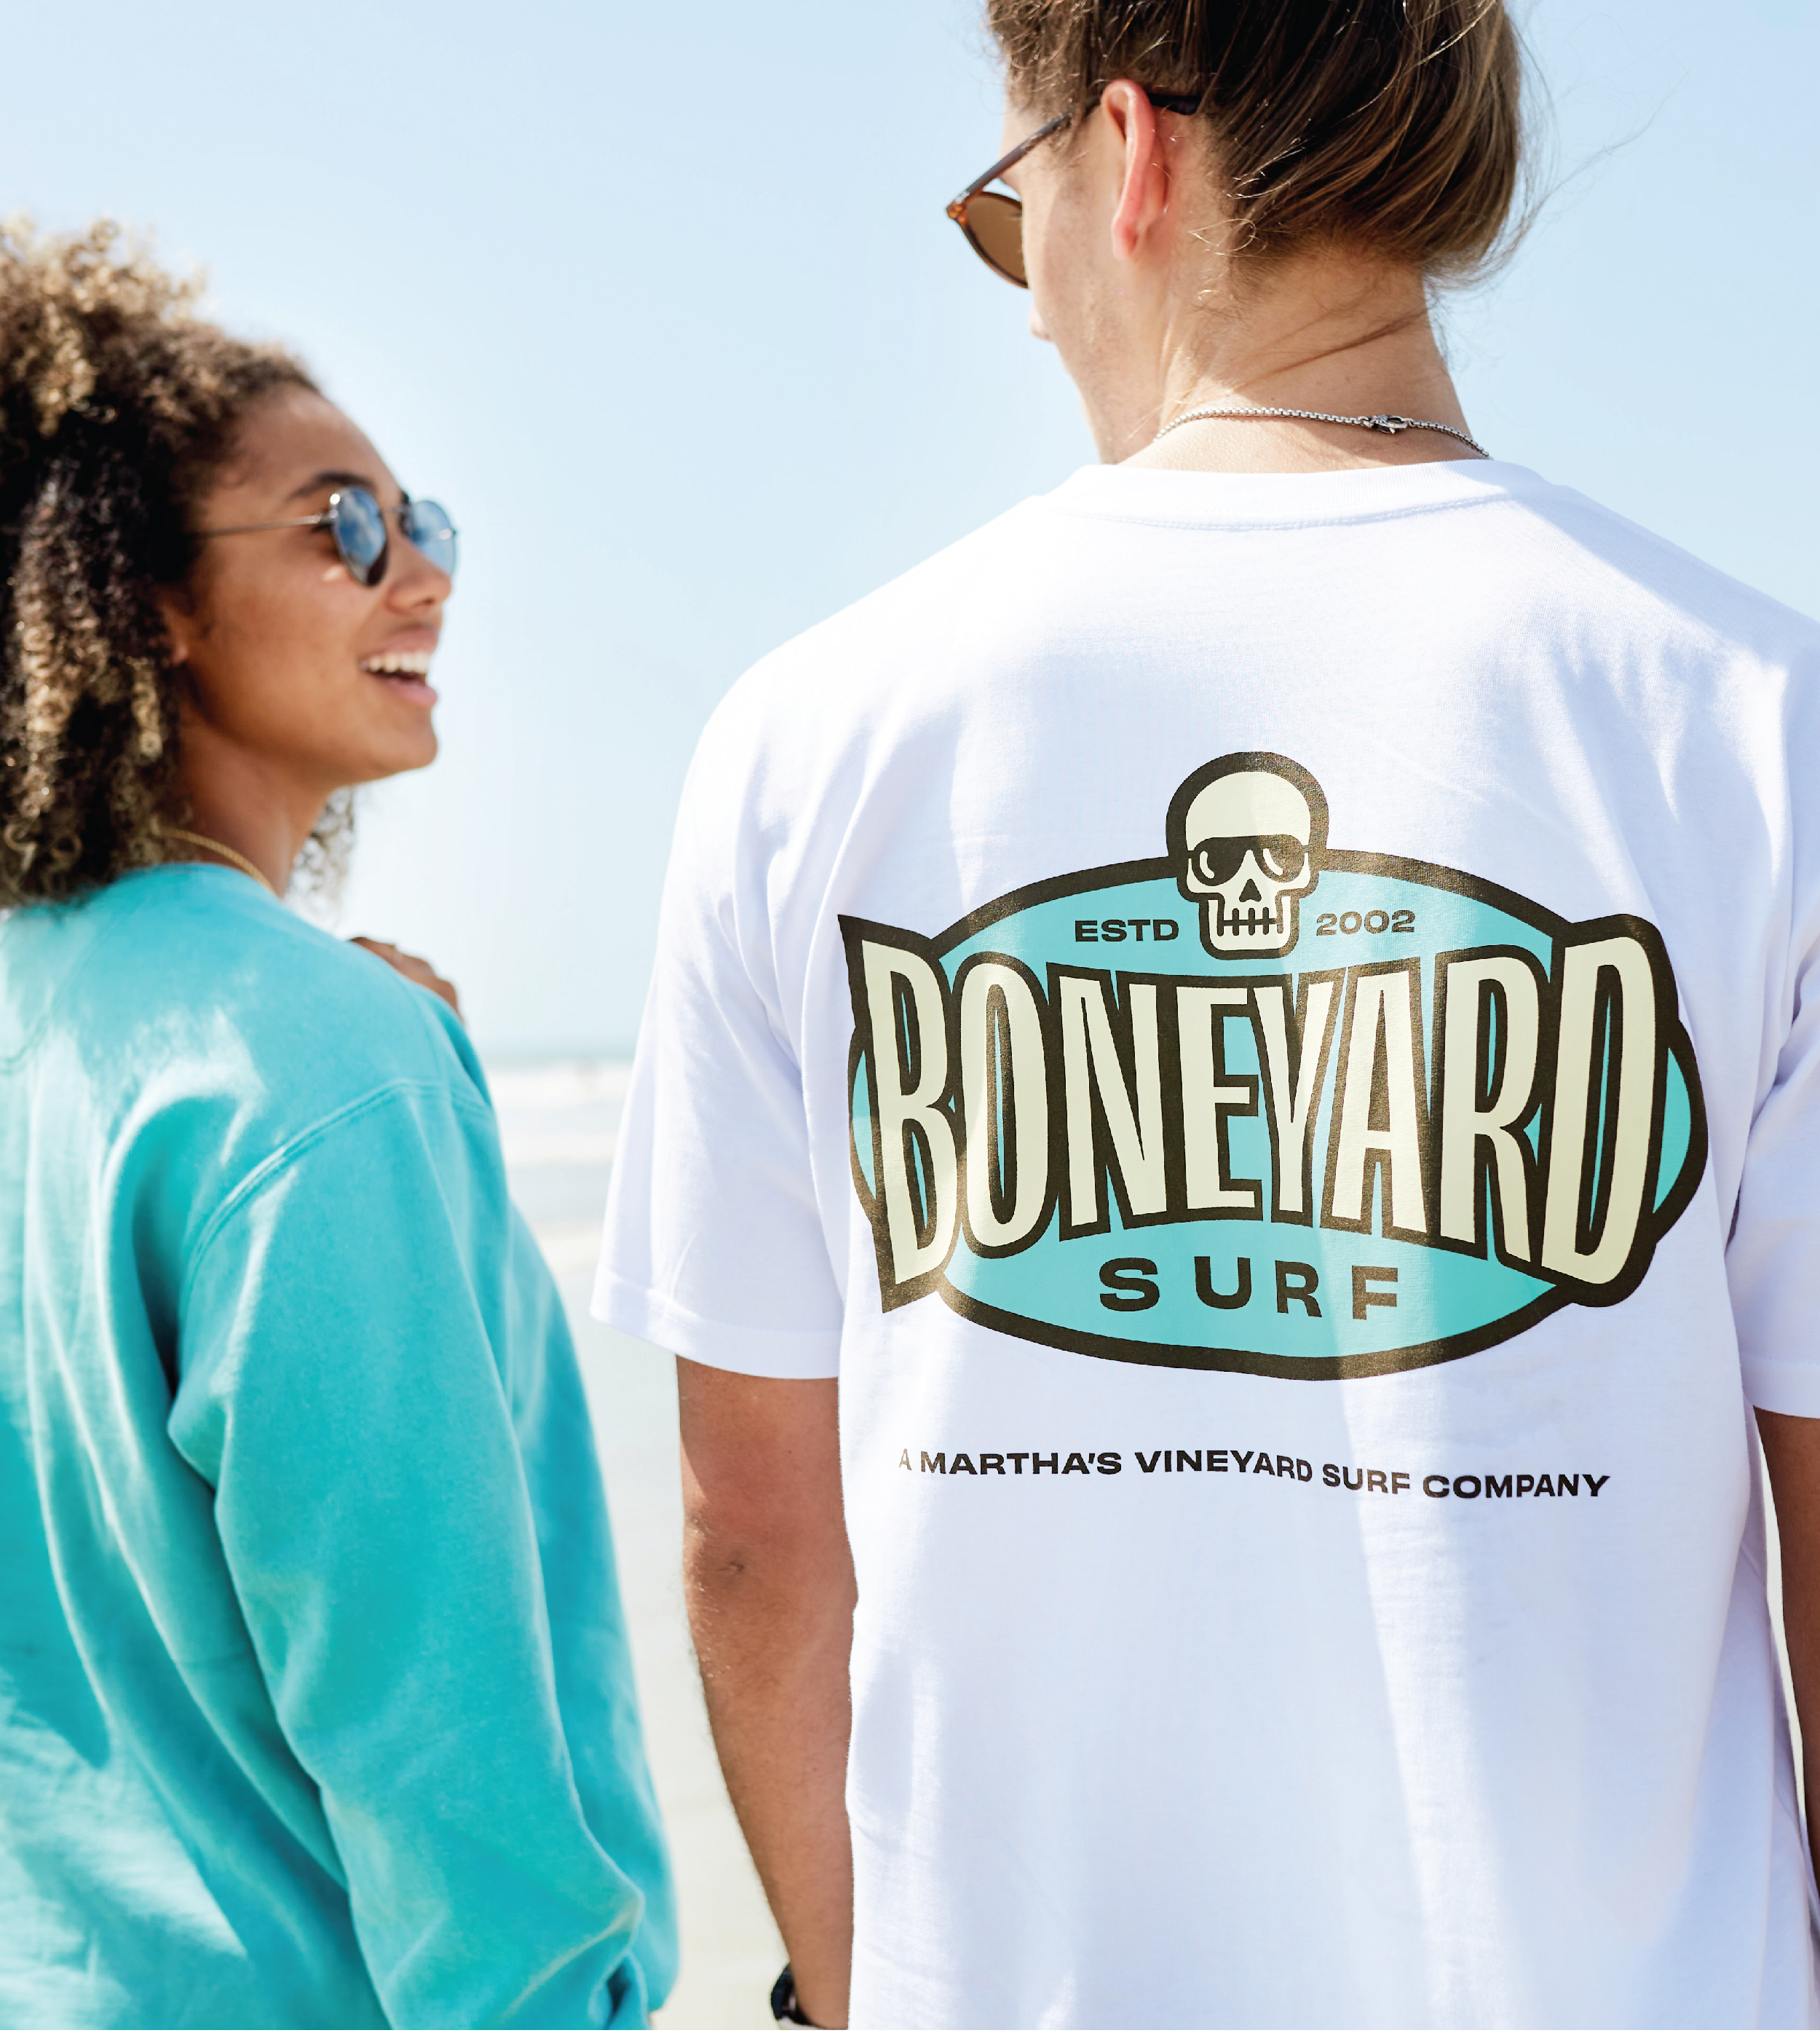 Boneyard-CustomerFeature-Blog